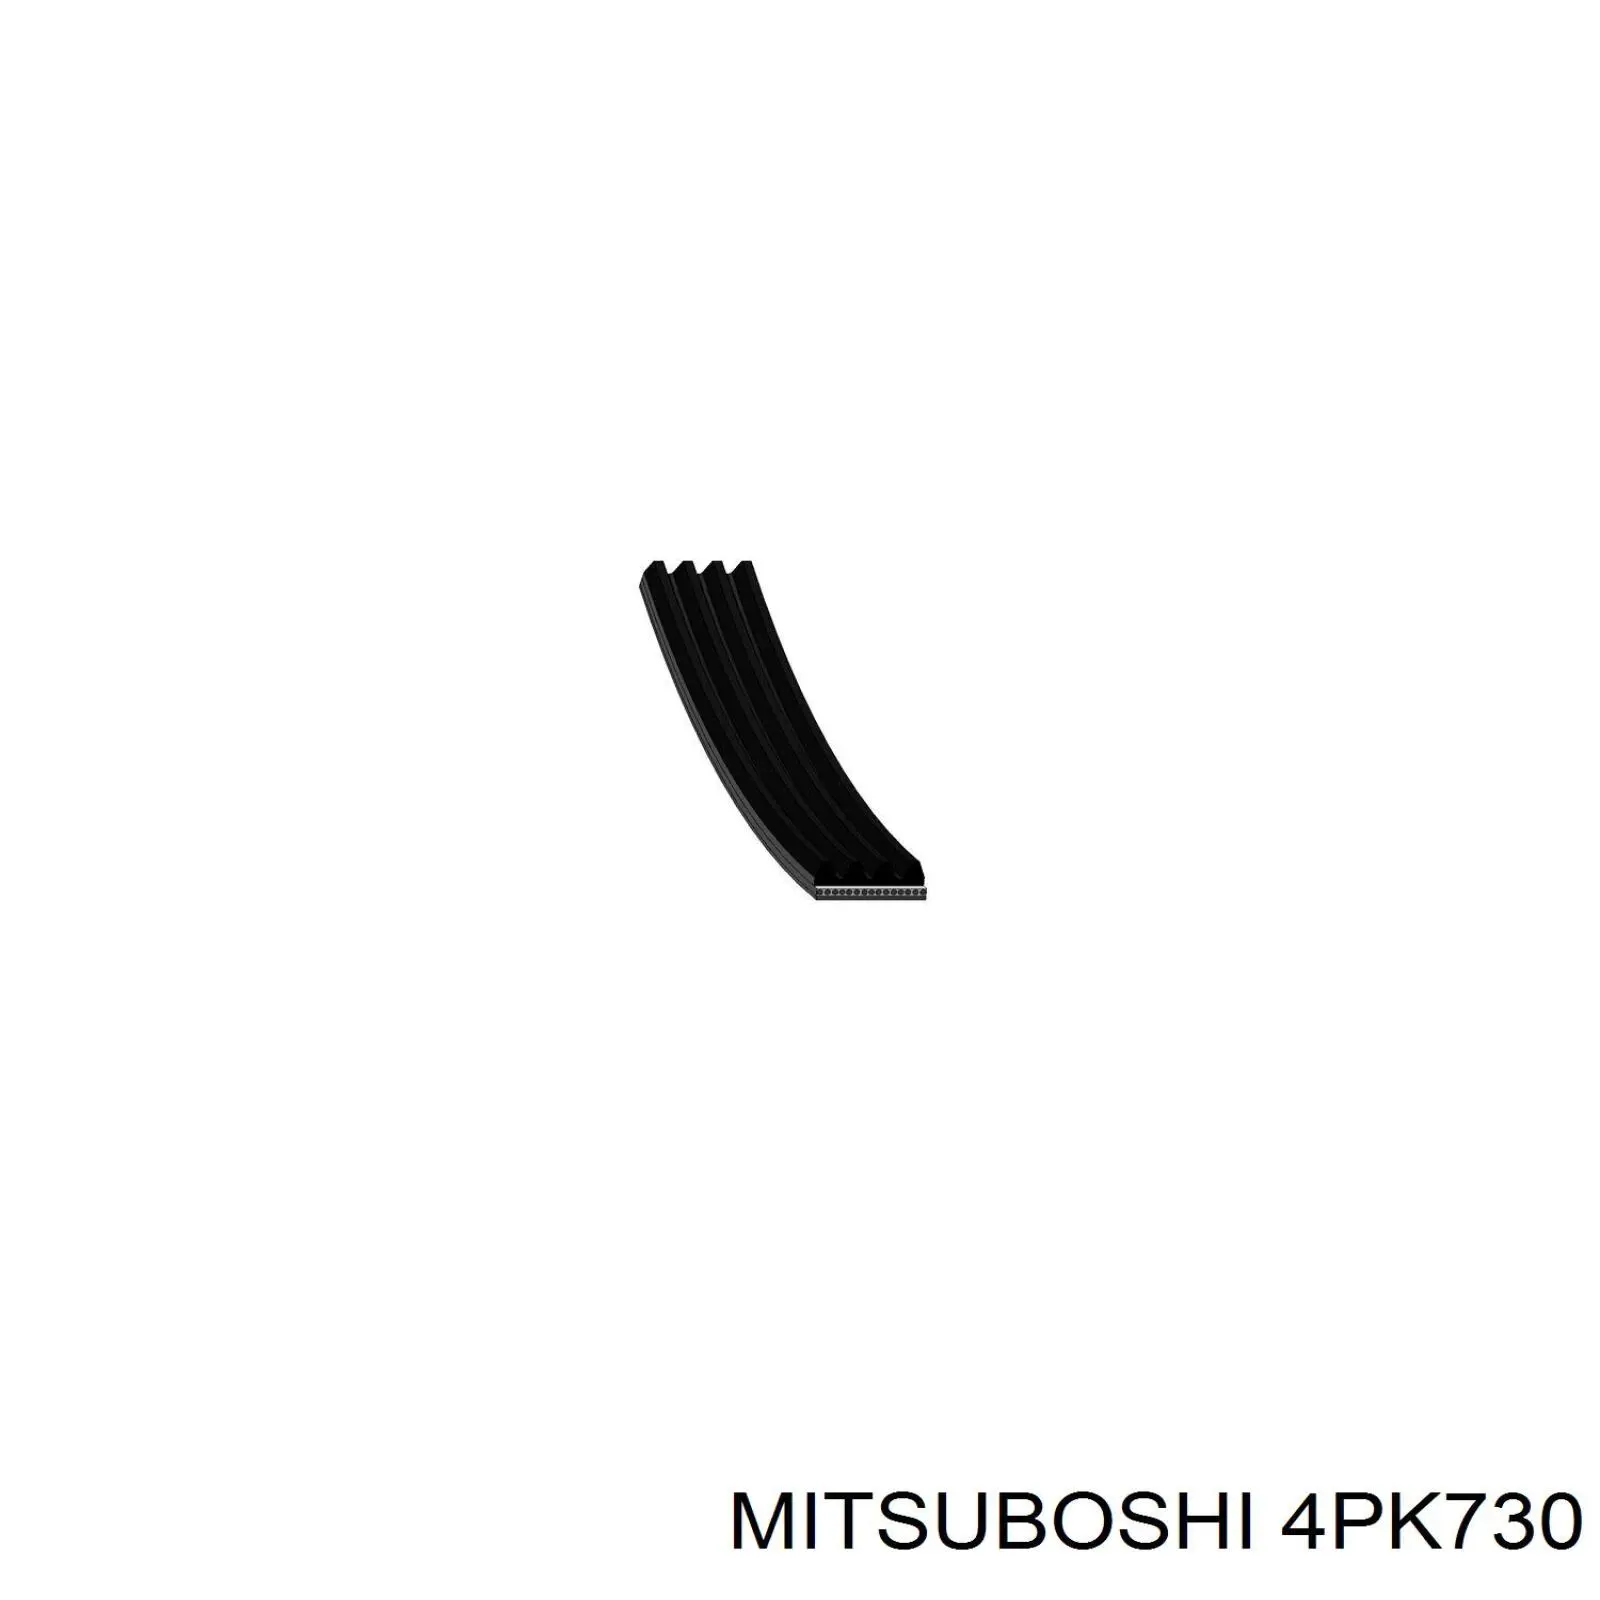 4PK730 Mitsuboshi ремень генератора